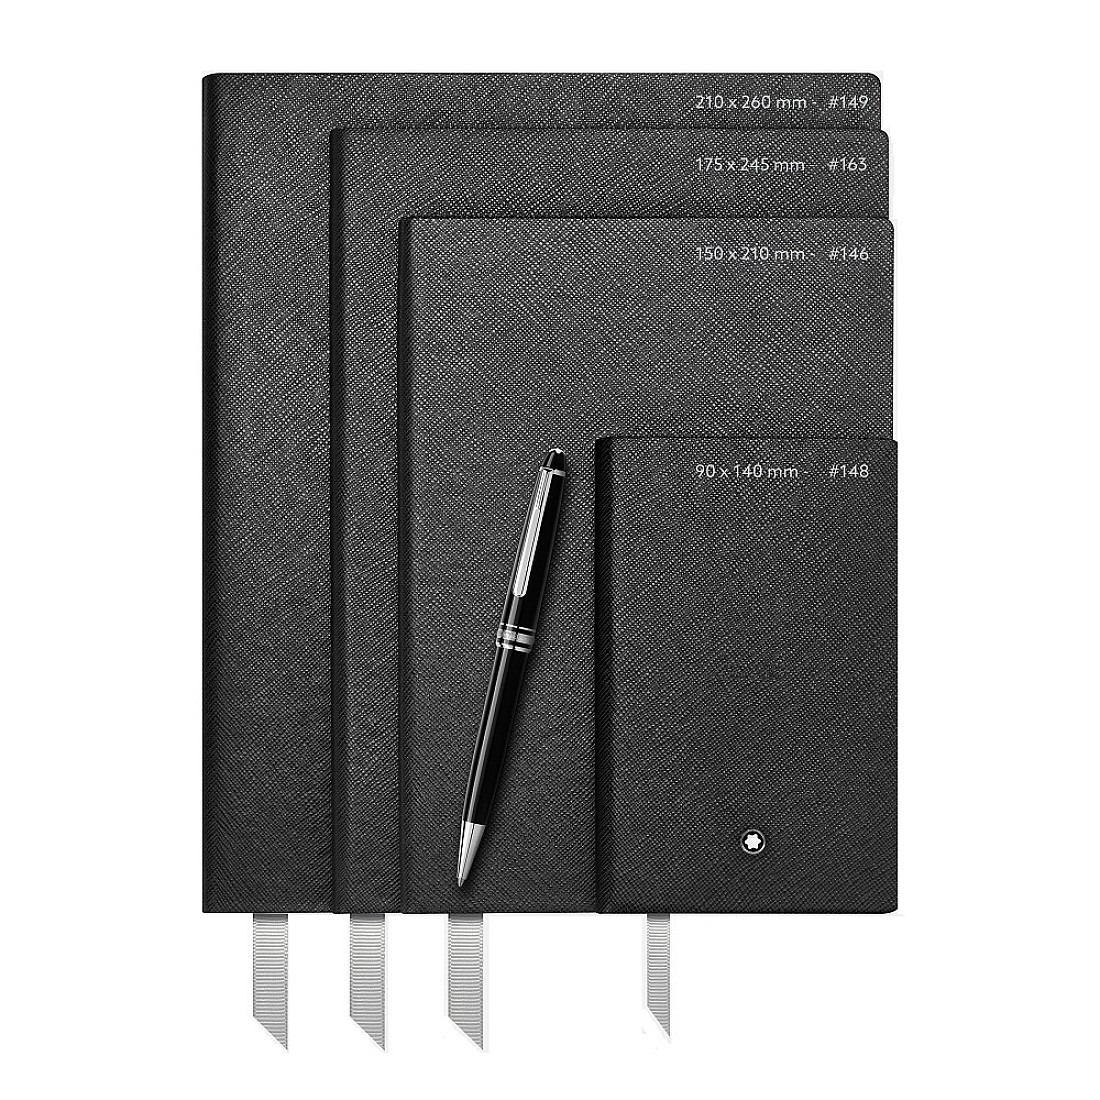 Montblanc Fine Stationery #149 Croco Print Shiny Black Large Sketch/Notebook